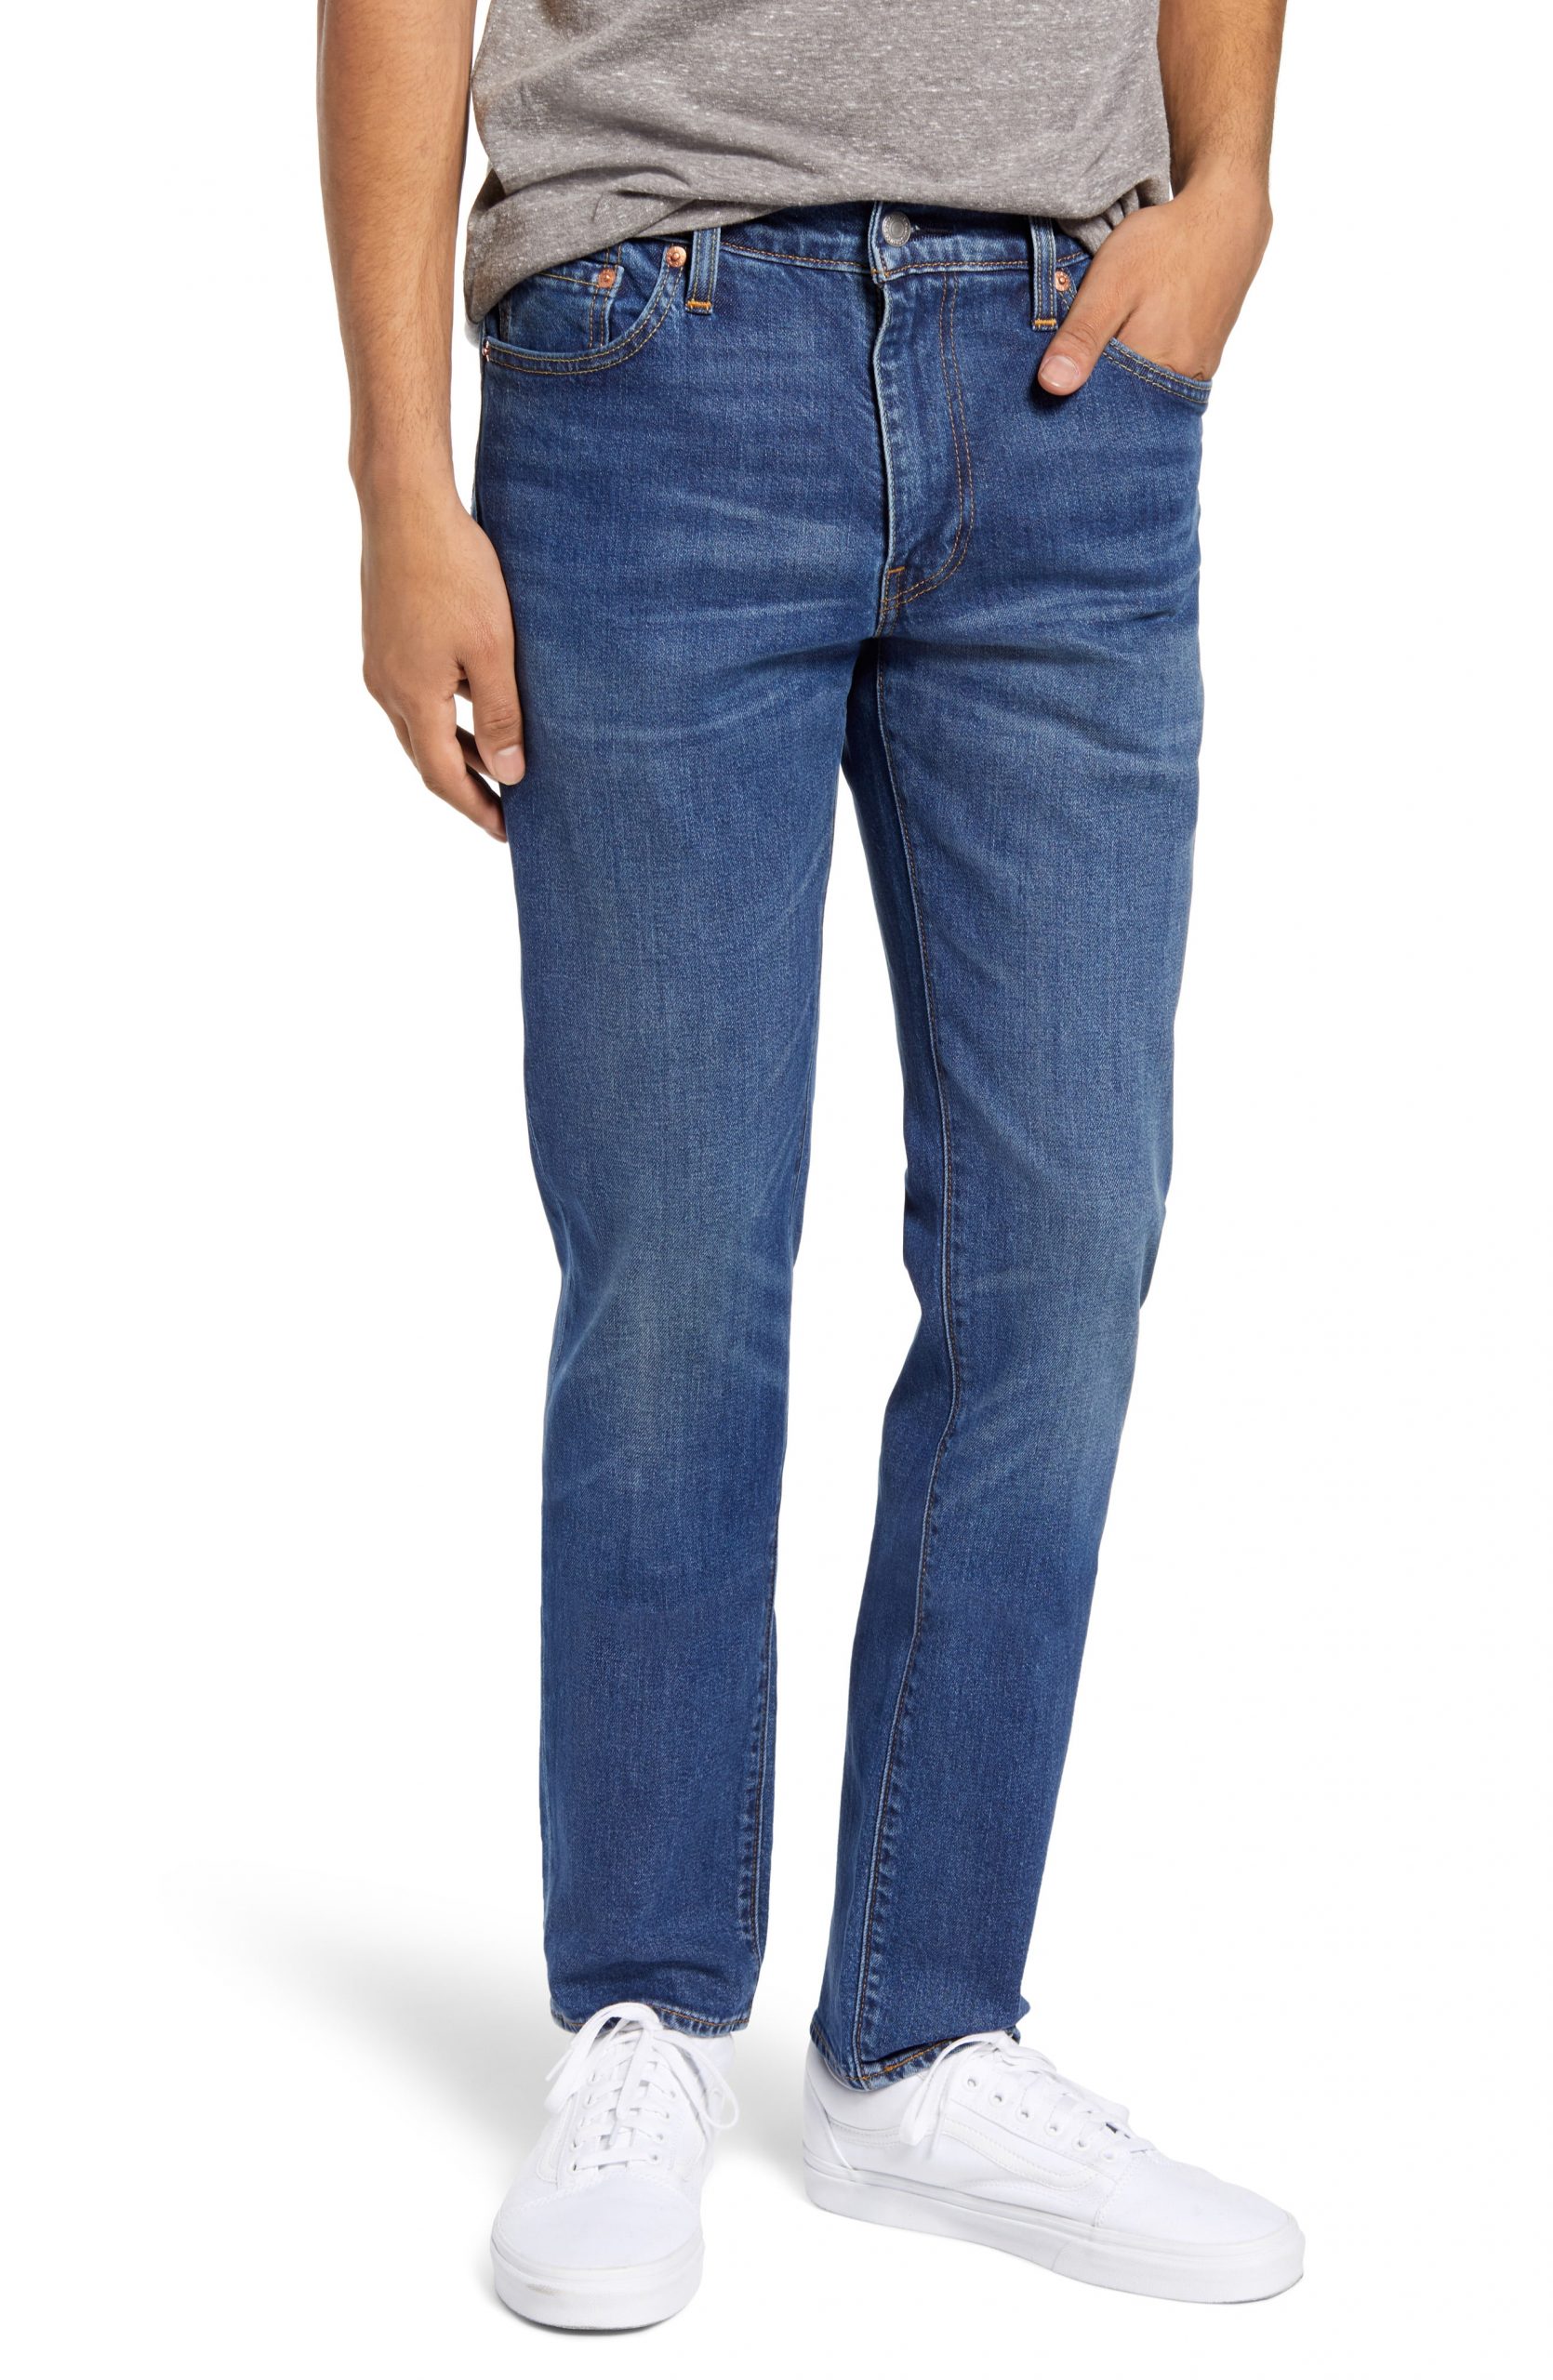 511(TM) Slim Fit Jeans, Size 